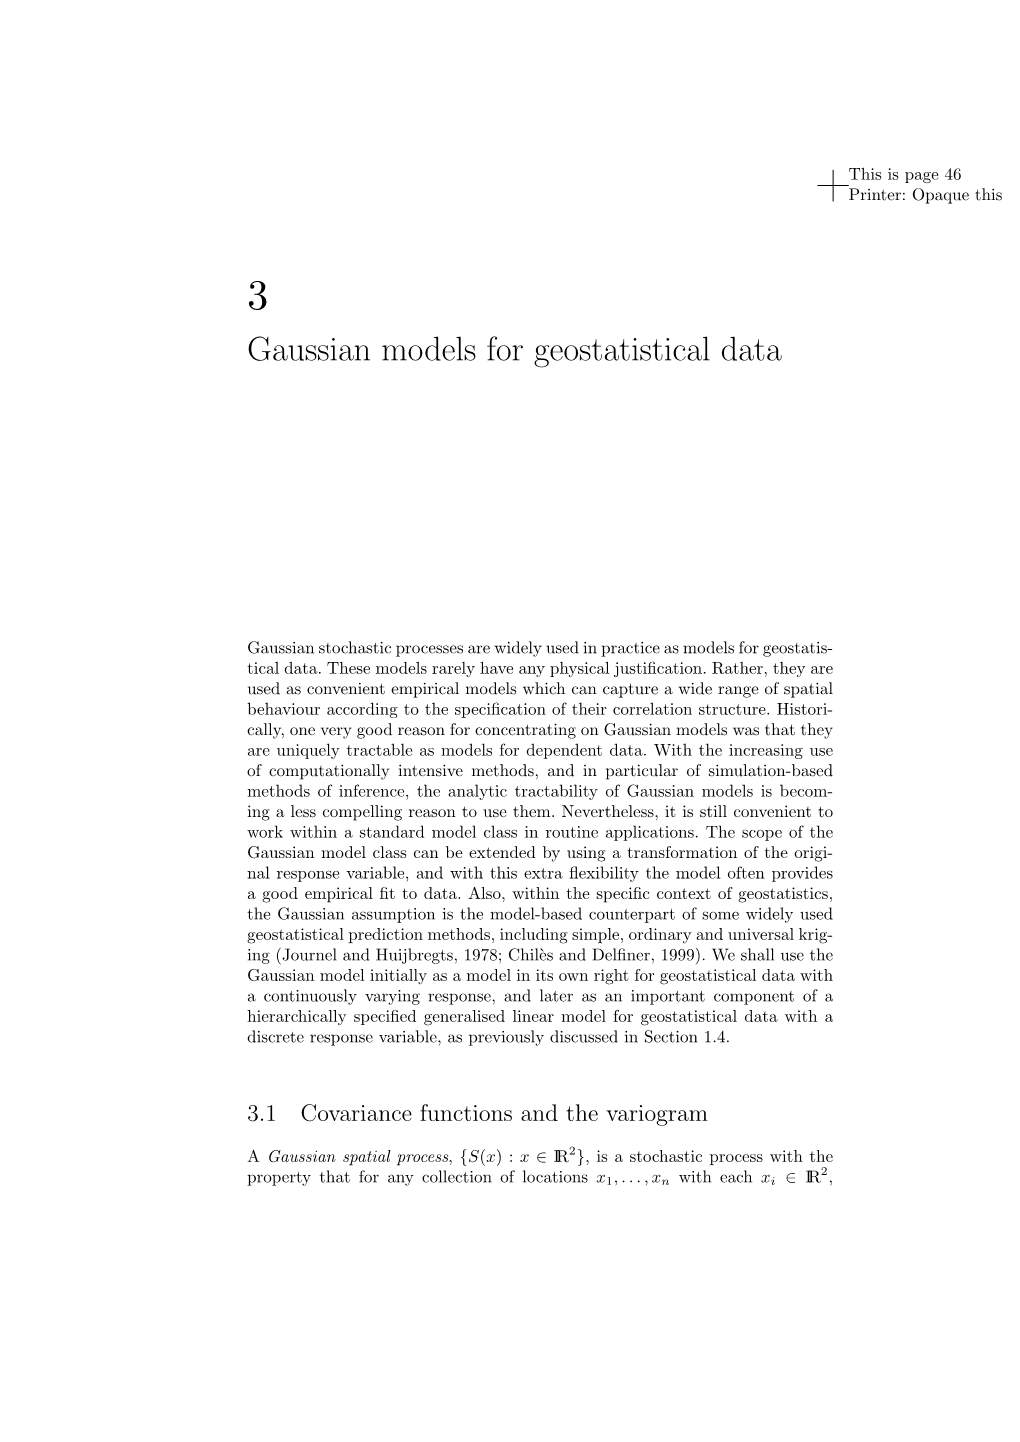 Gaussian Models for Geostatistical Data